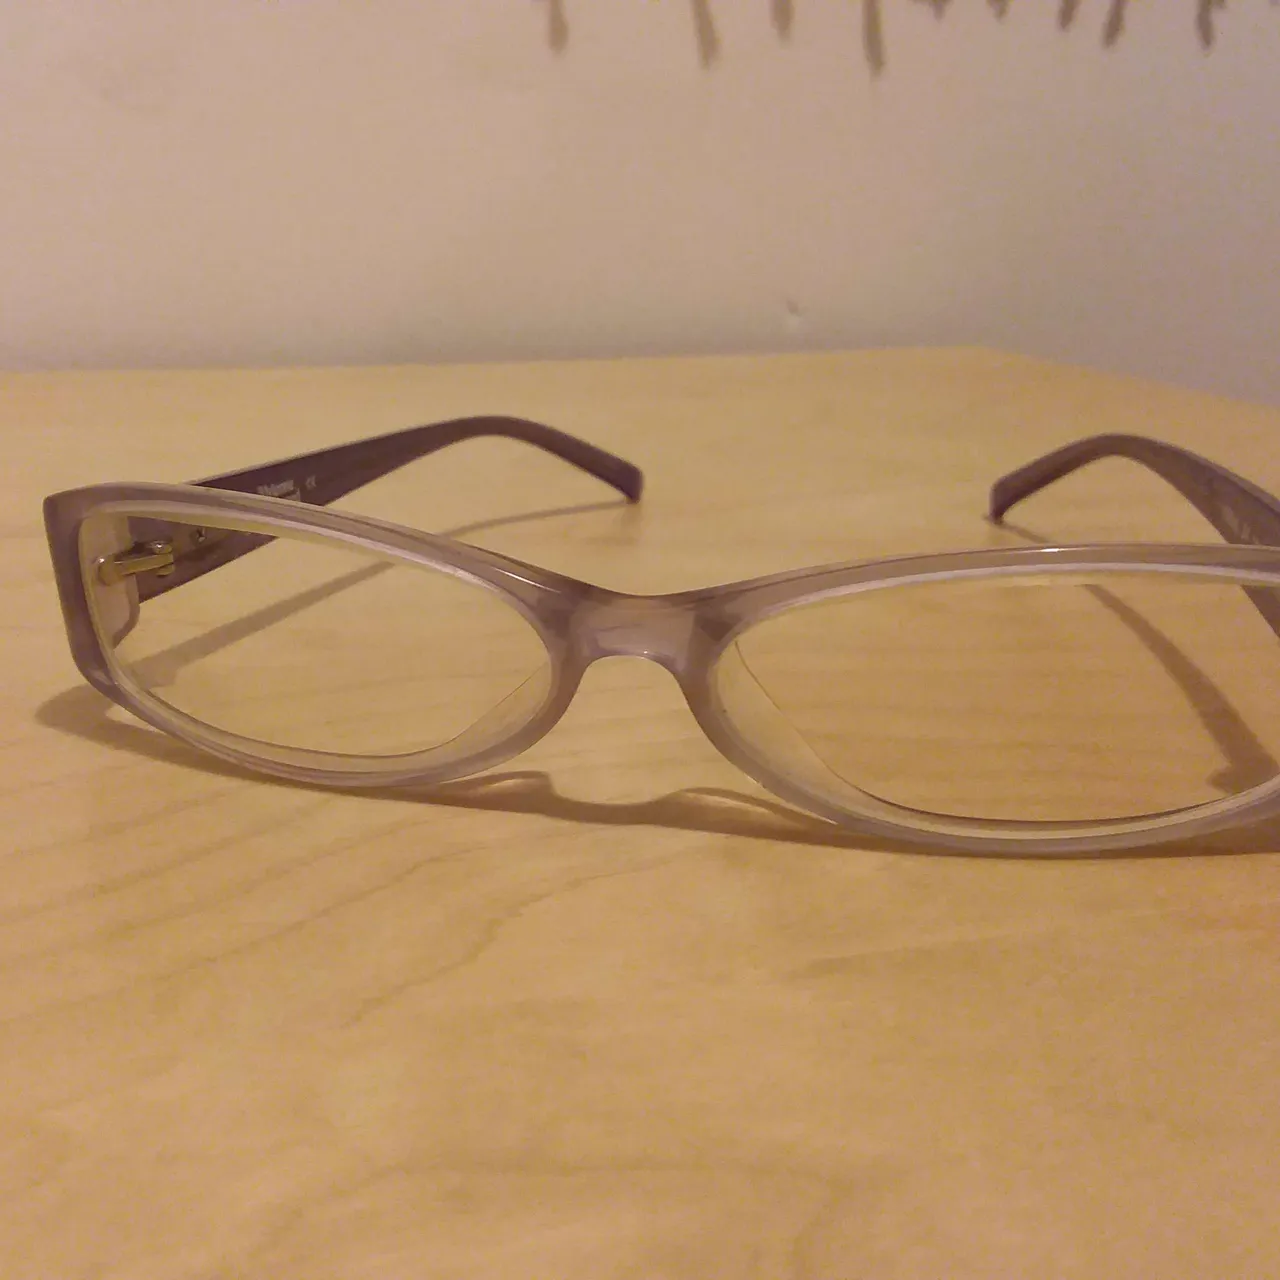 Vivienne Westwood Glasses Frame photo 1